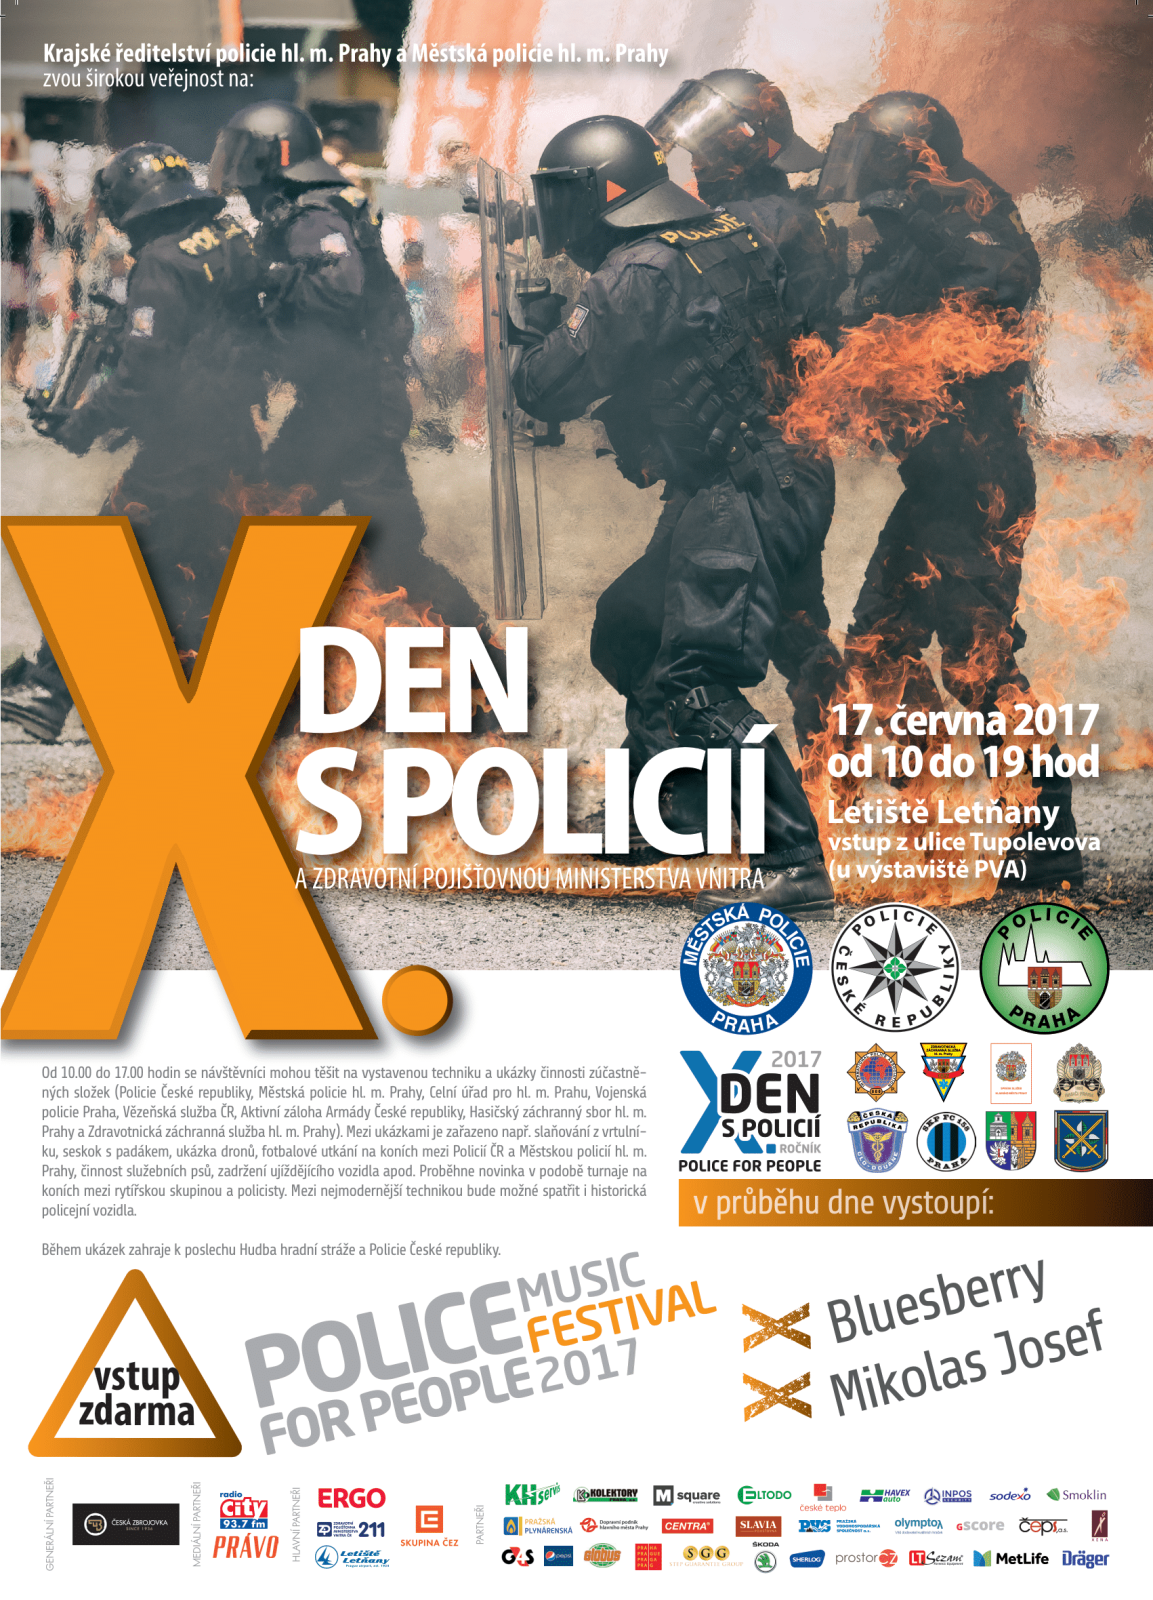 X-Den-s-Policii-plakat-2017.png